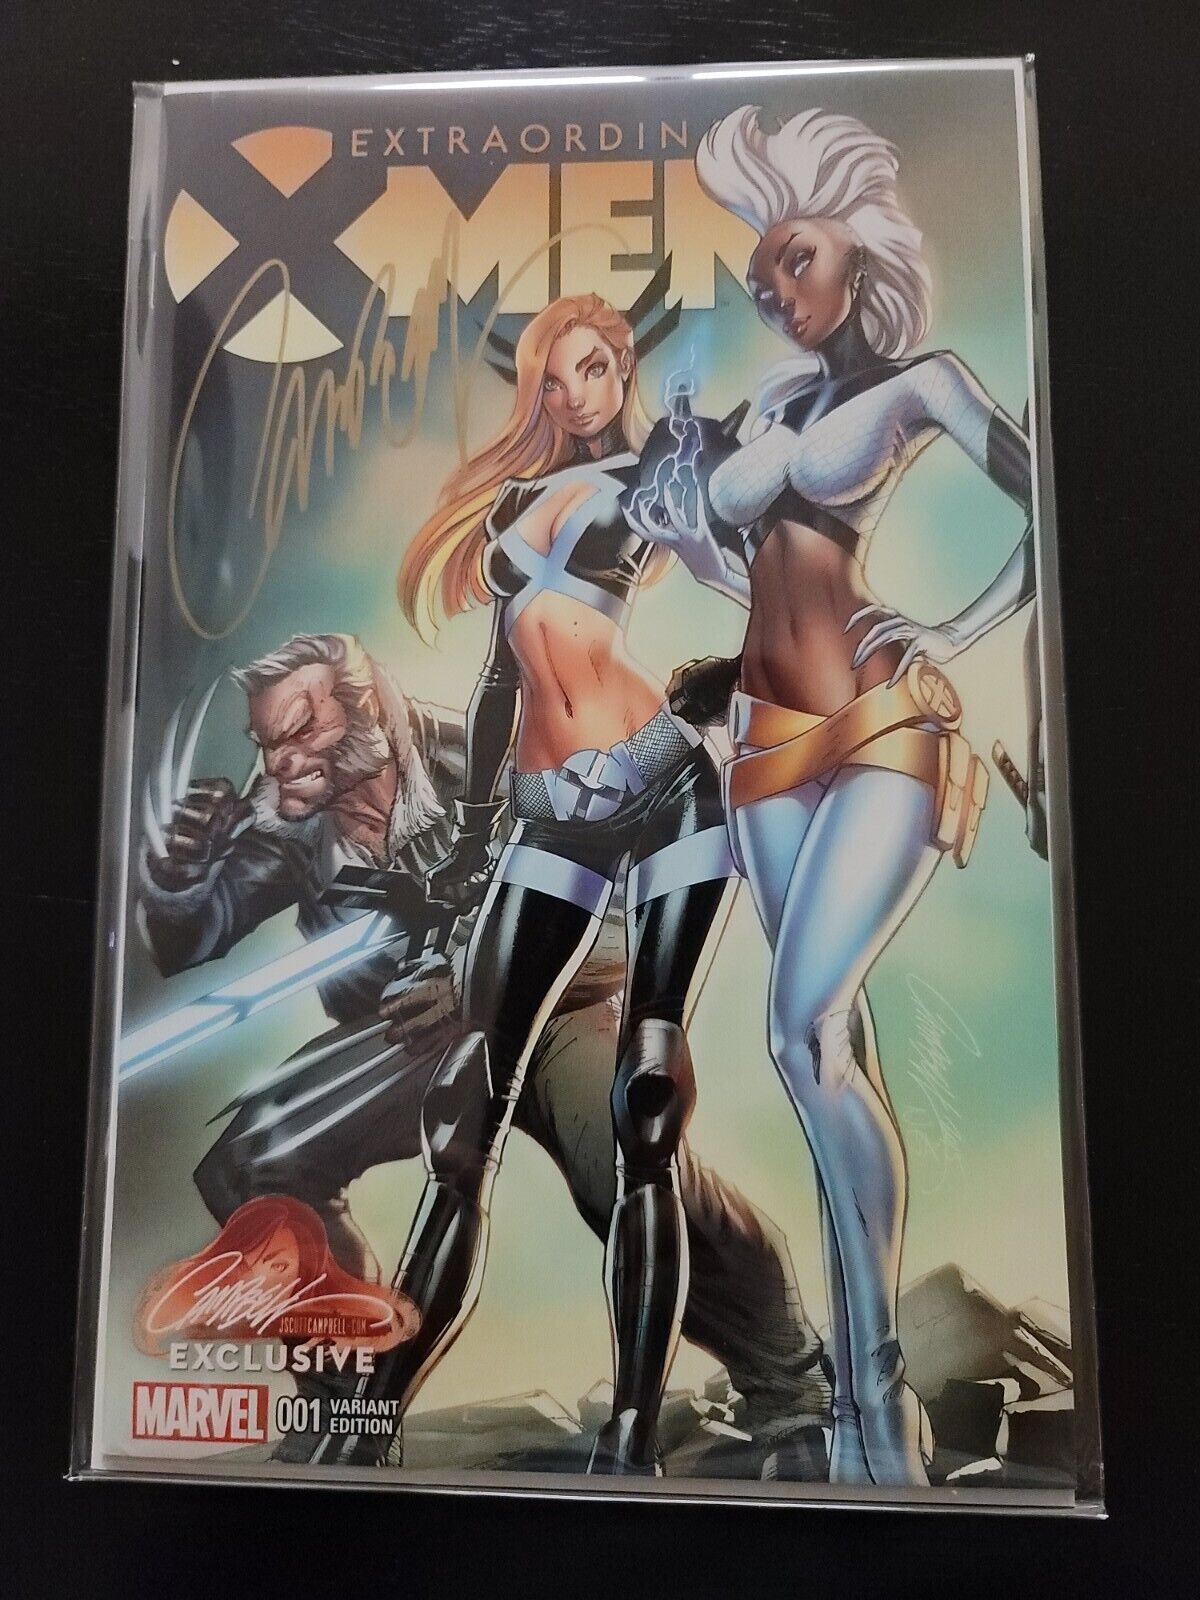 Extraordinary X-Men #001 J SCOTT CAMPBELL EXCLUSIVE VARIANT SIGNED W COA NM +++